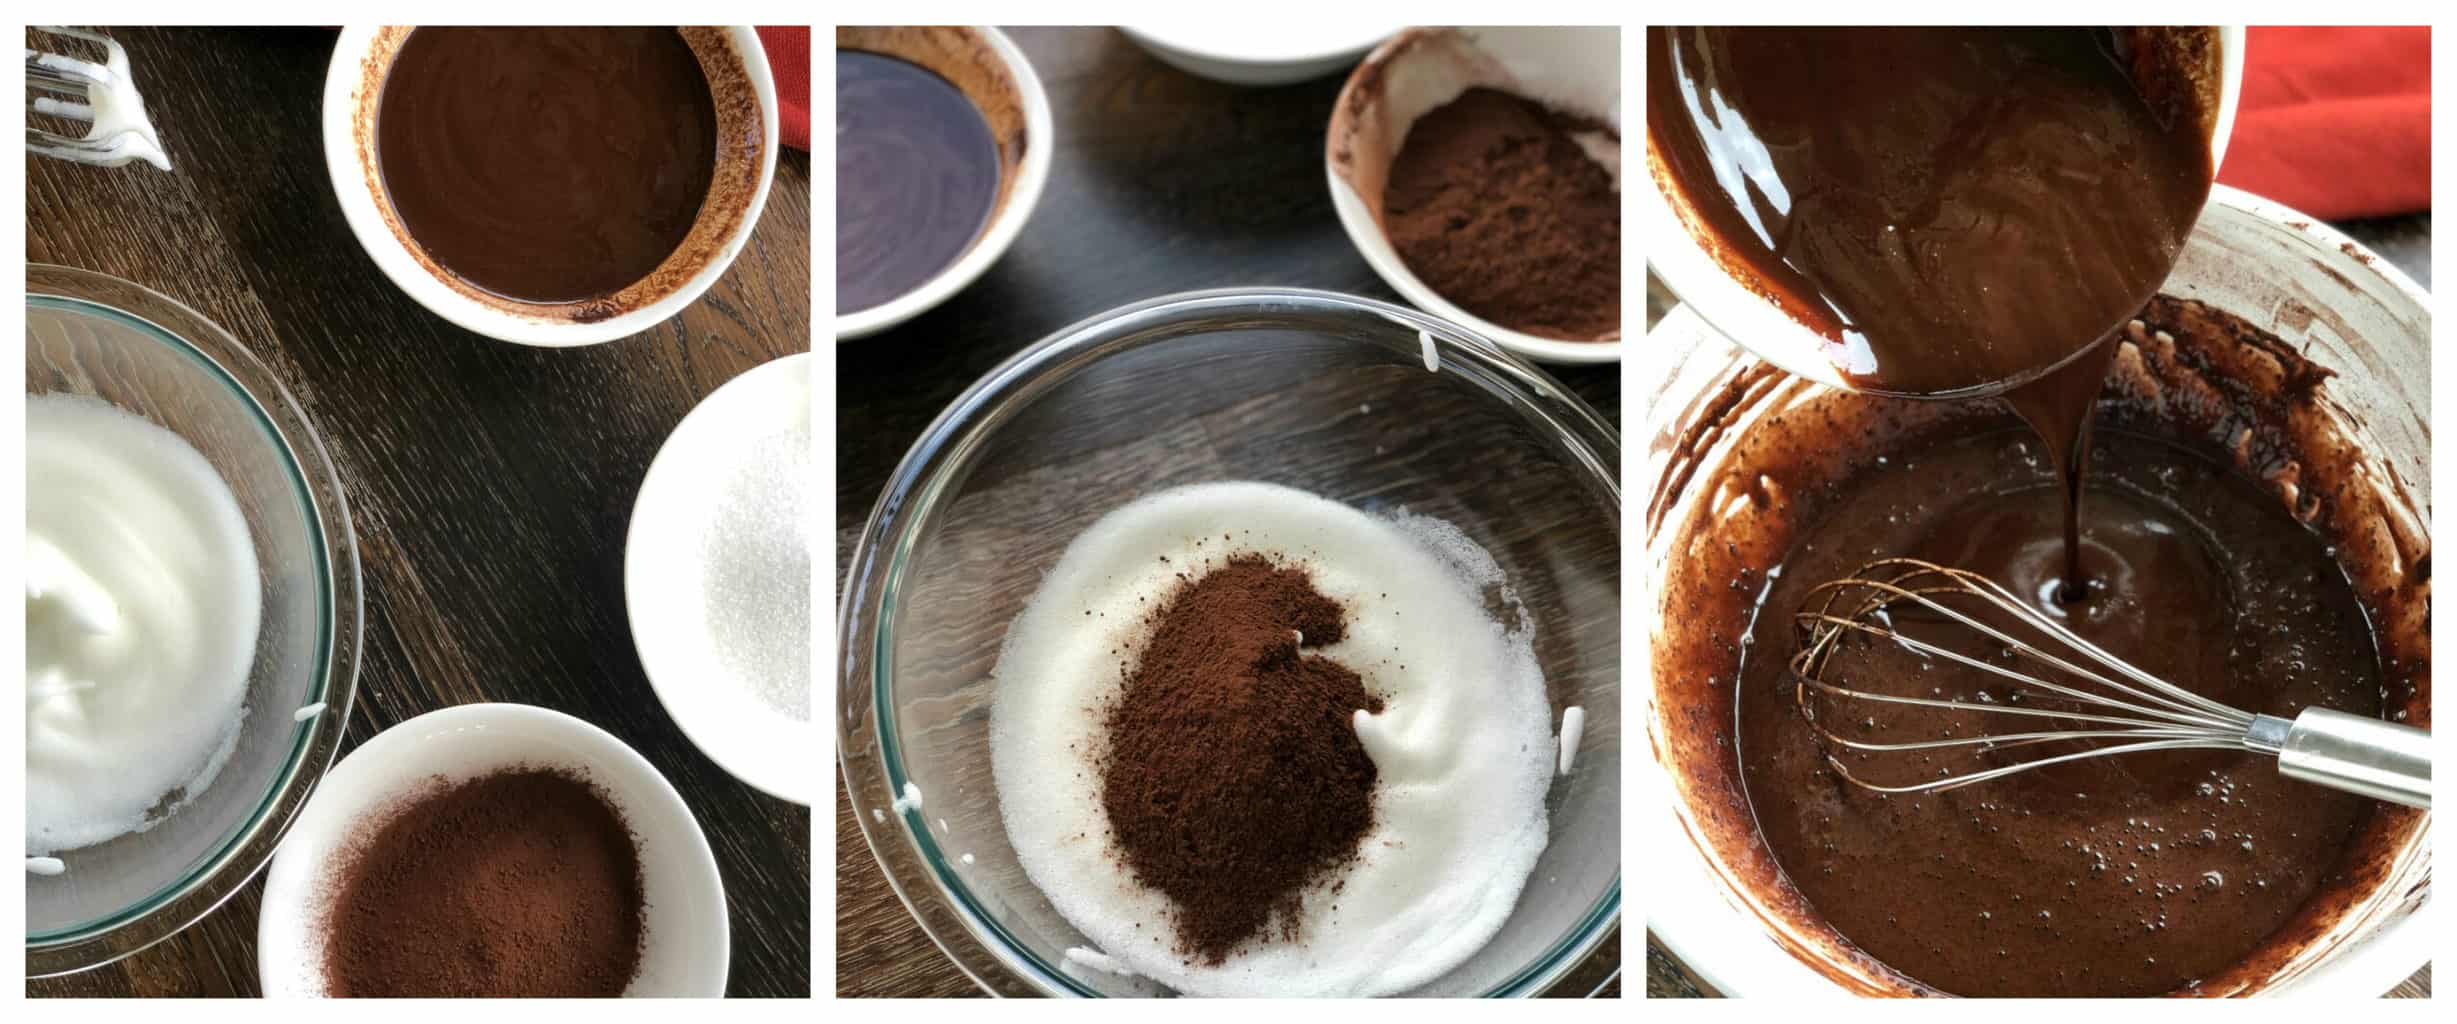 How to Make Flourless Chocolate Cake 